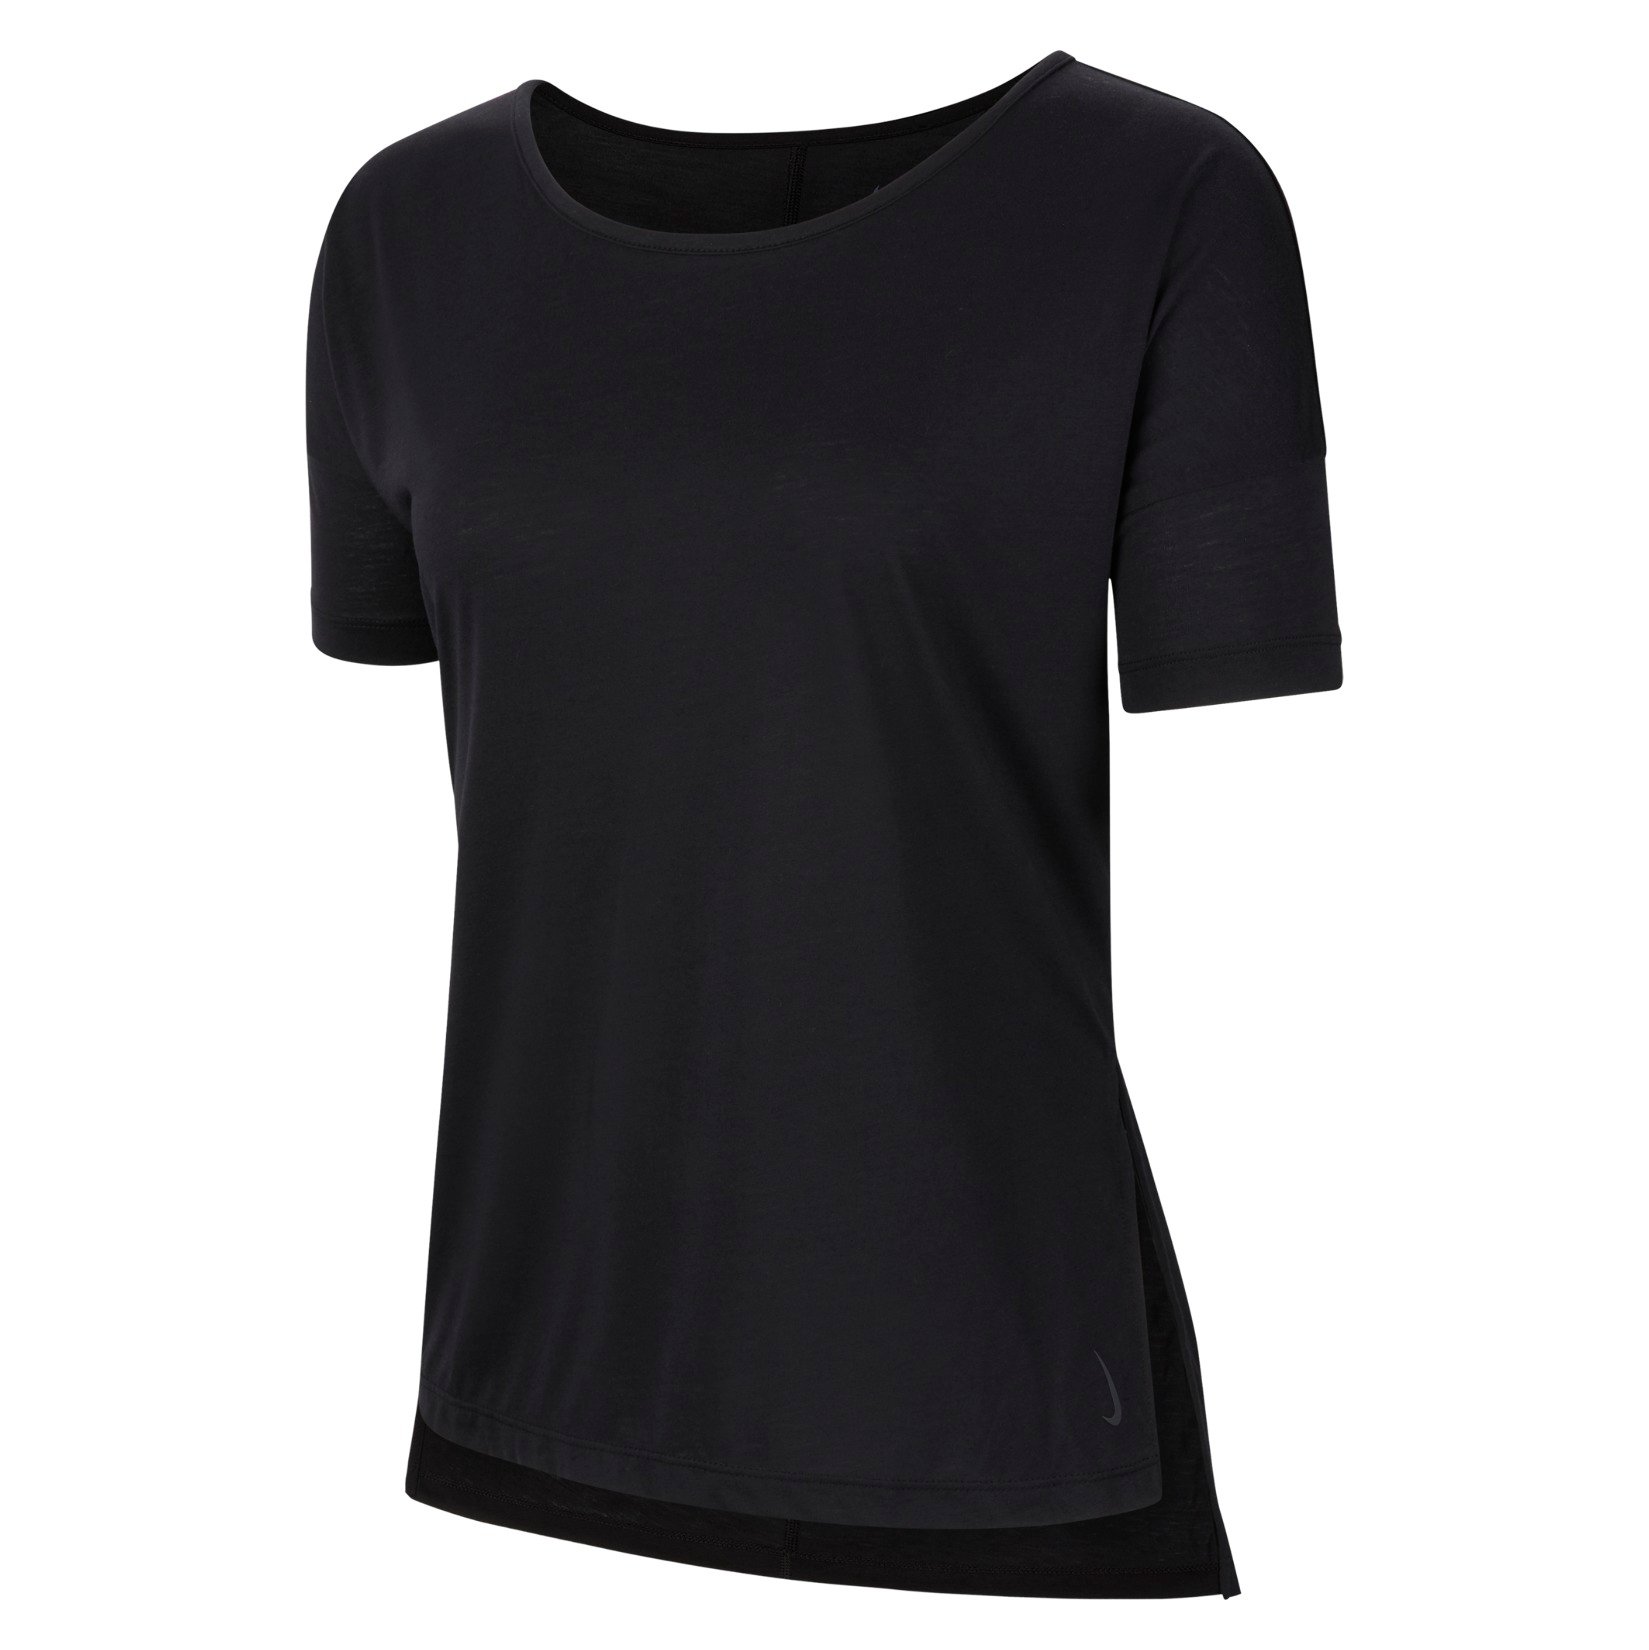 Nike Yoga Training Top Women's Size Medium, Dri Fit Shirt, Black CJ9326-010